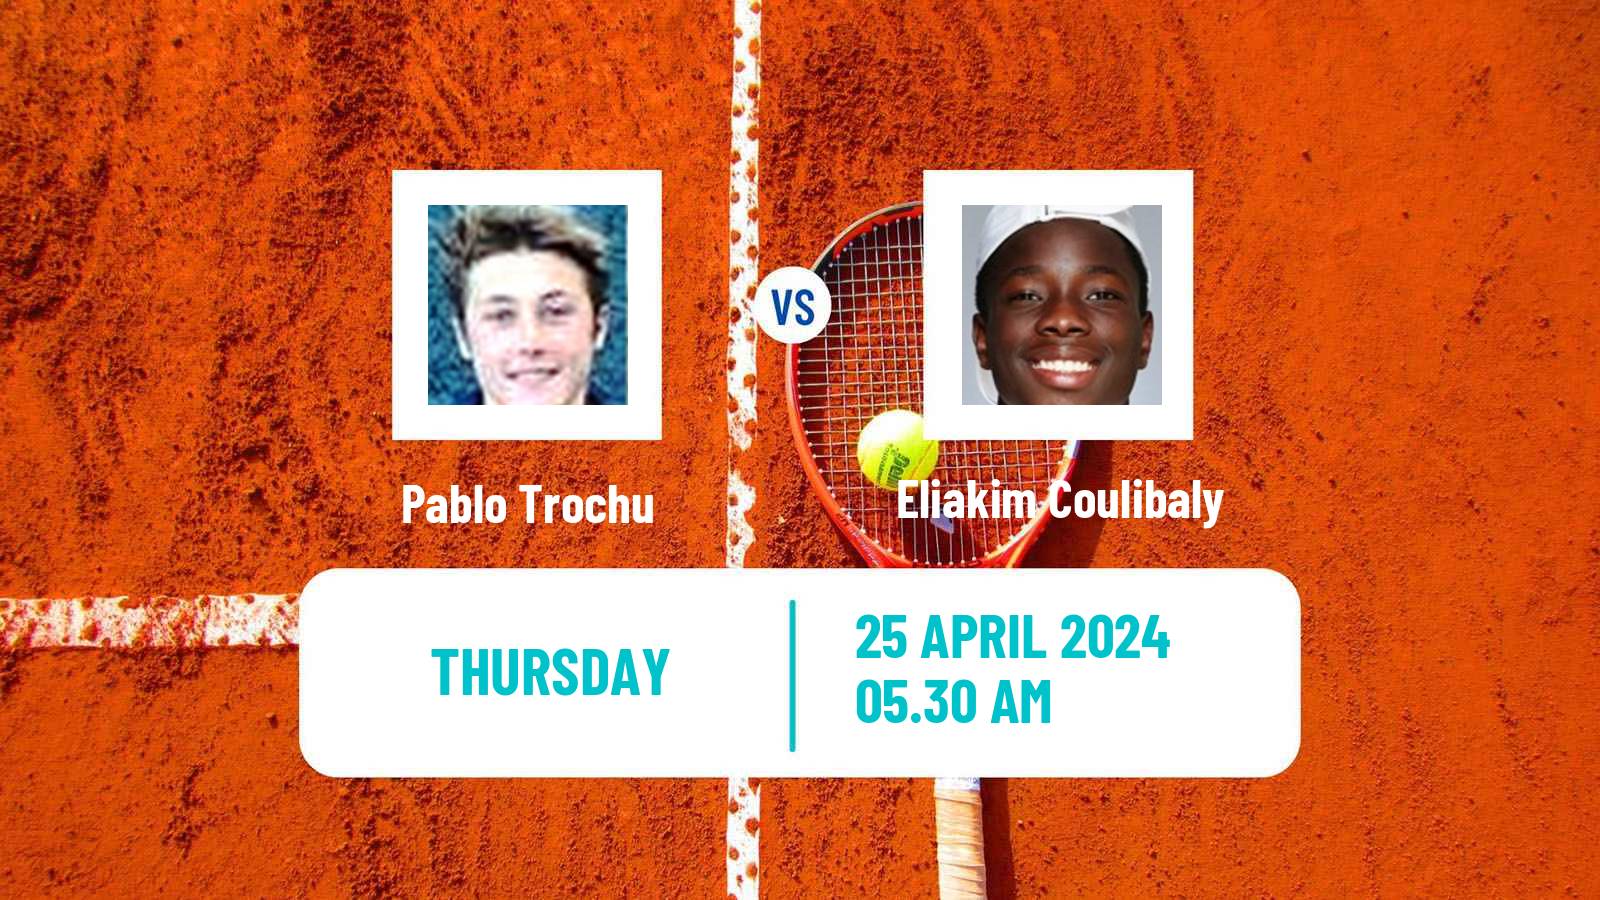 Tennis ITF M15 Monastir 17 Men Pablo Trochu - Eliakim Coulibaly